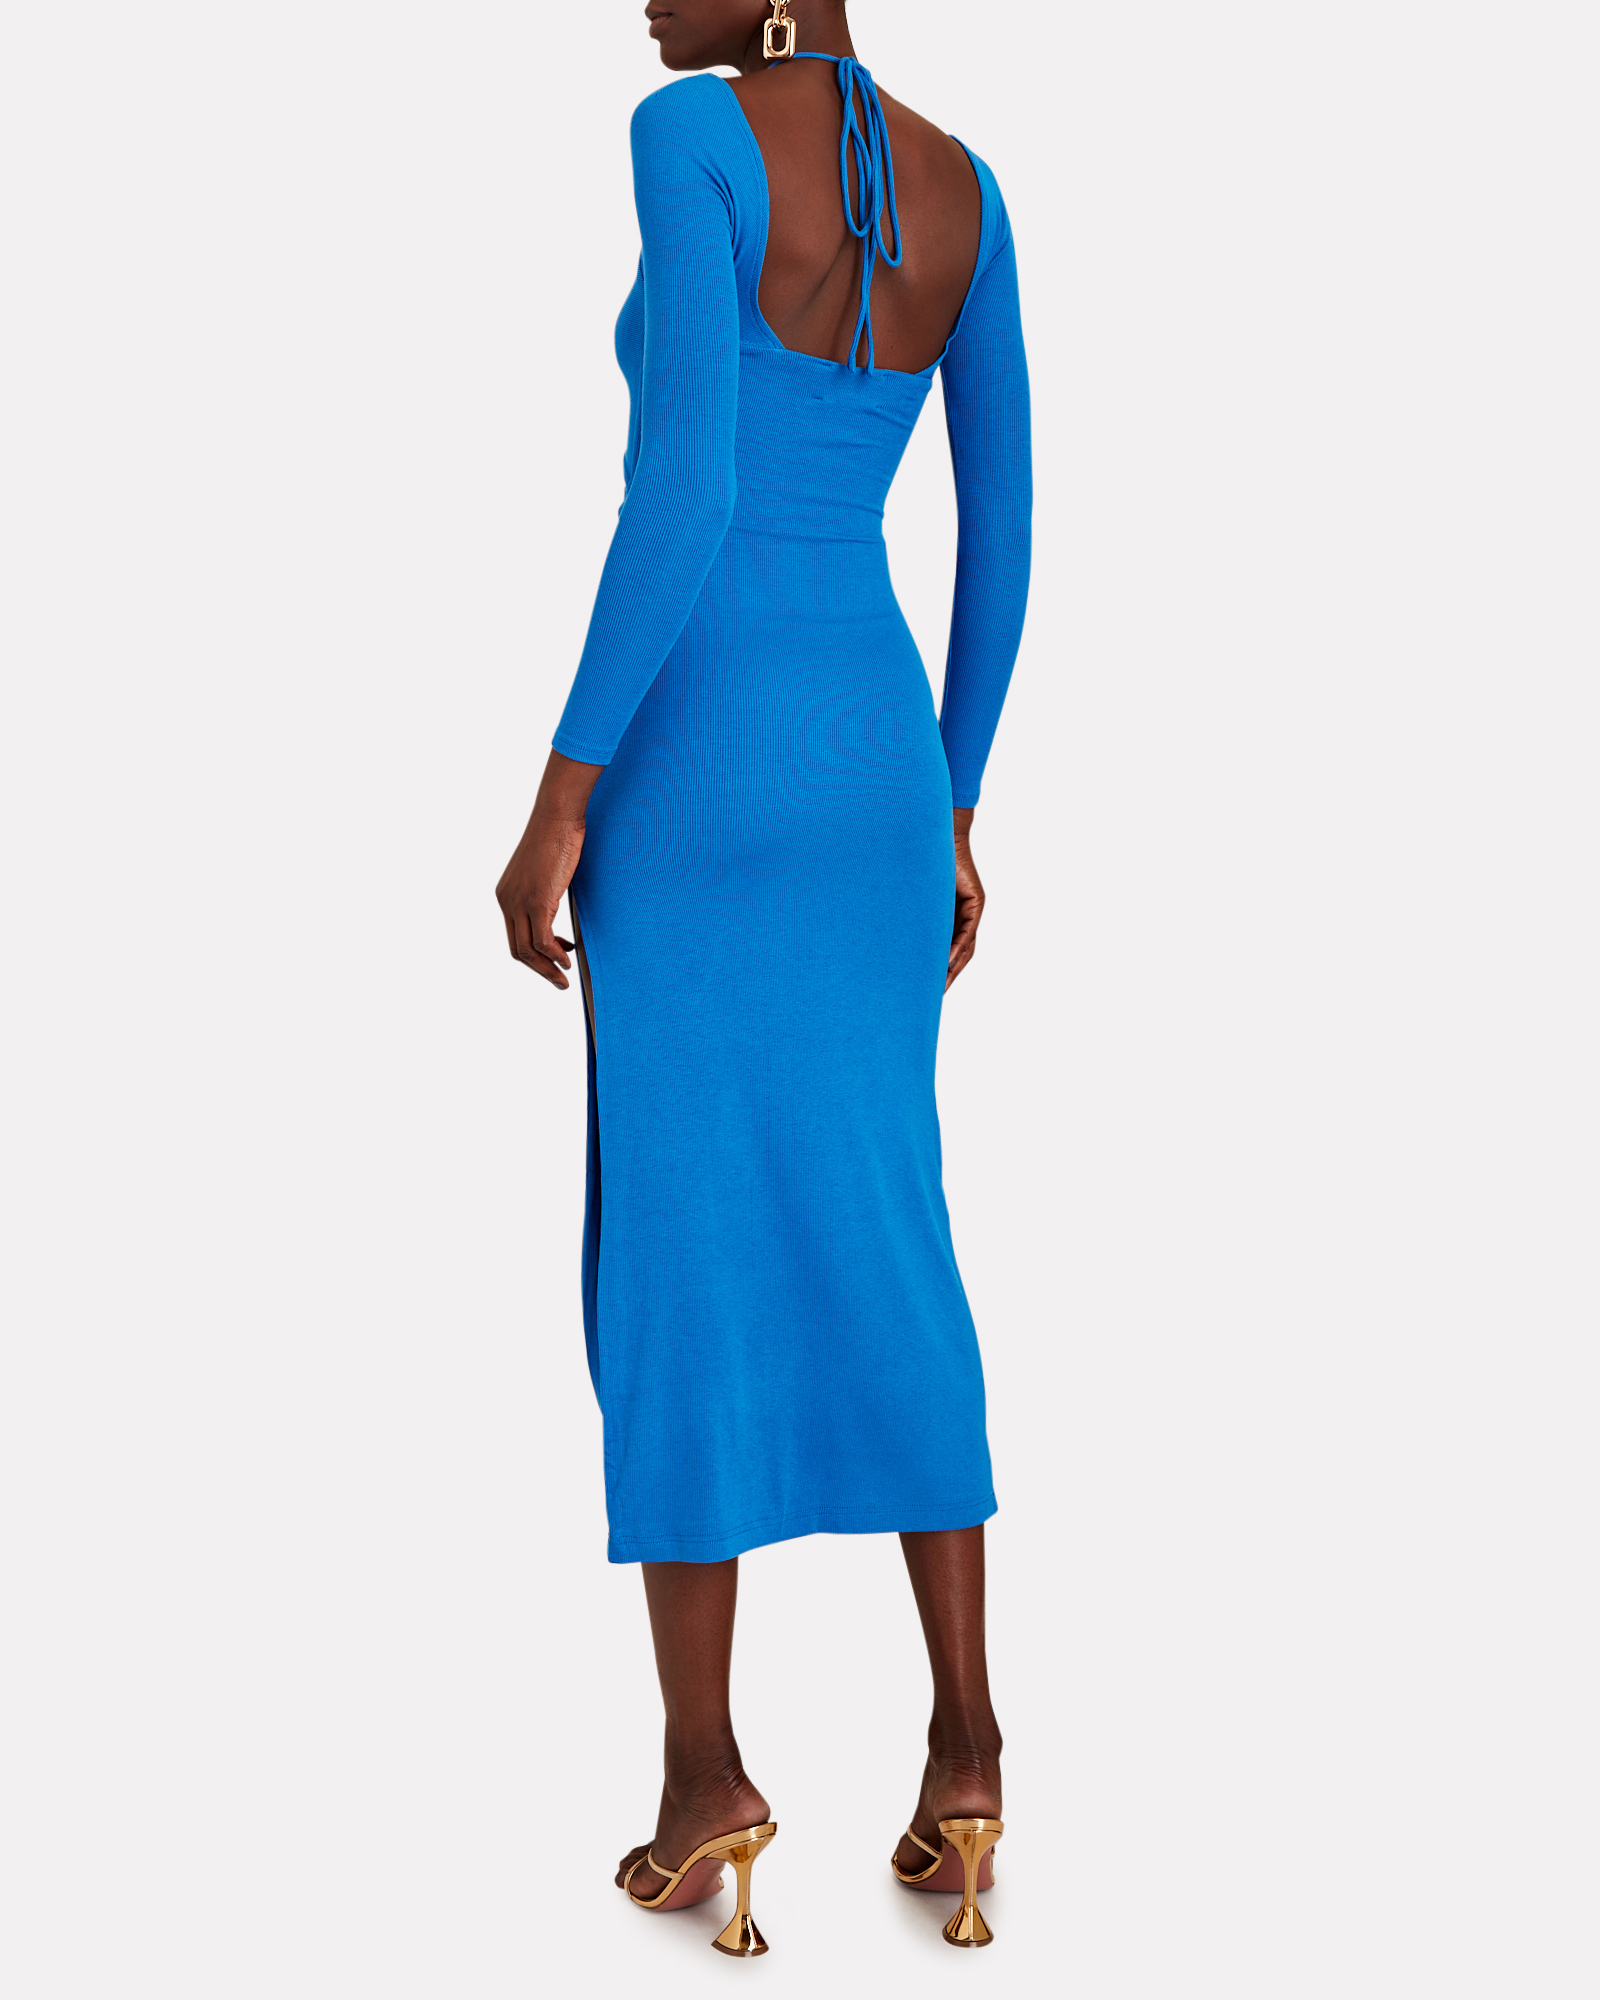 Lama Jouni Cut-Out Midi Dress In Blue | INTERMIX®